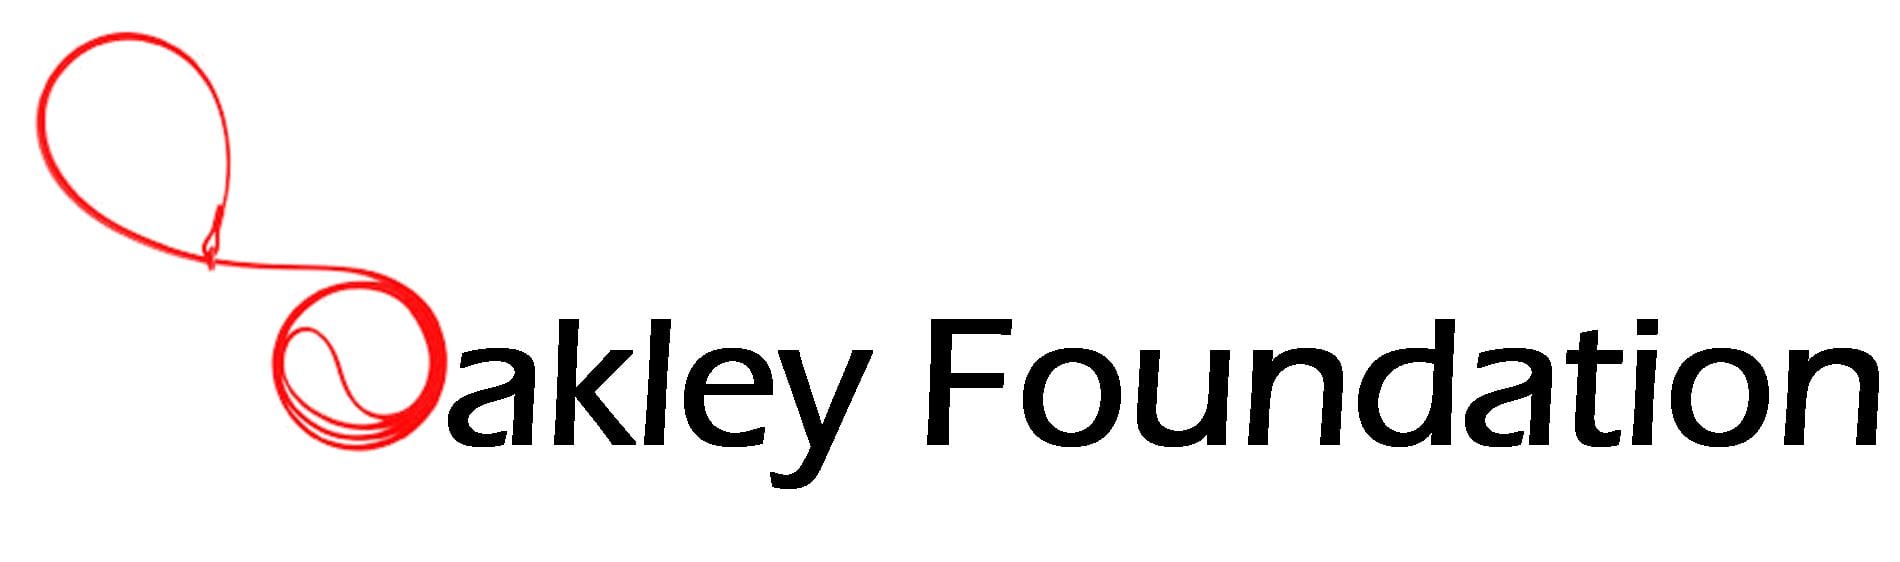 Oakley Foundation